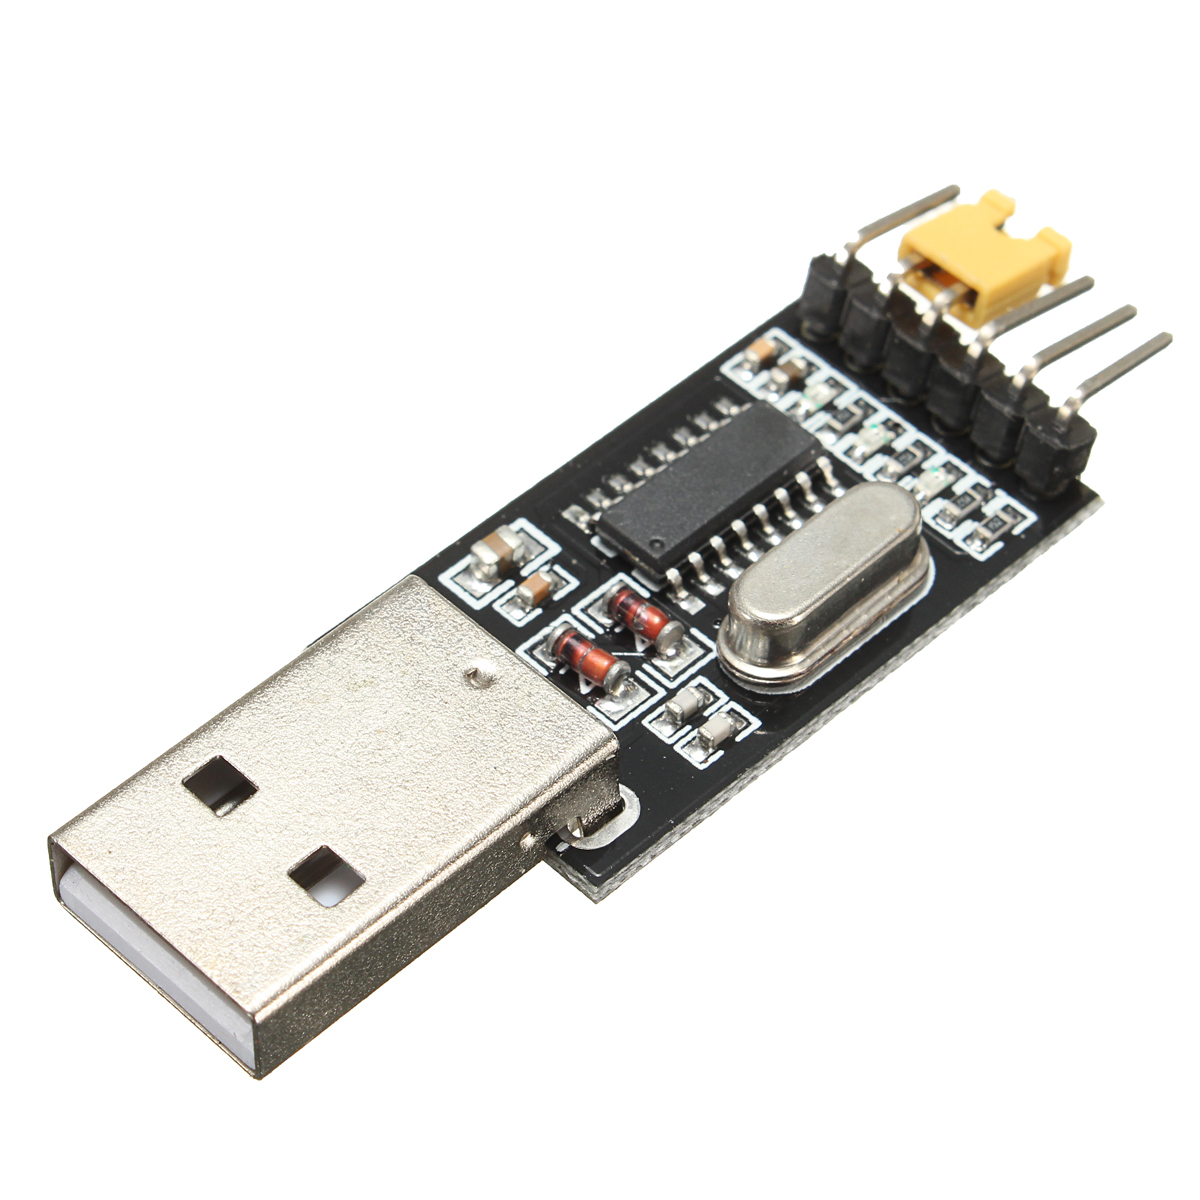 20pcs 3.3V 5V USB to TTL Converter CH340G UART Serial Adapter Module STC 2